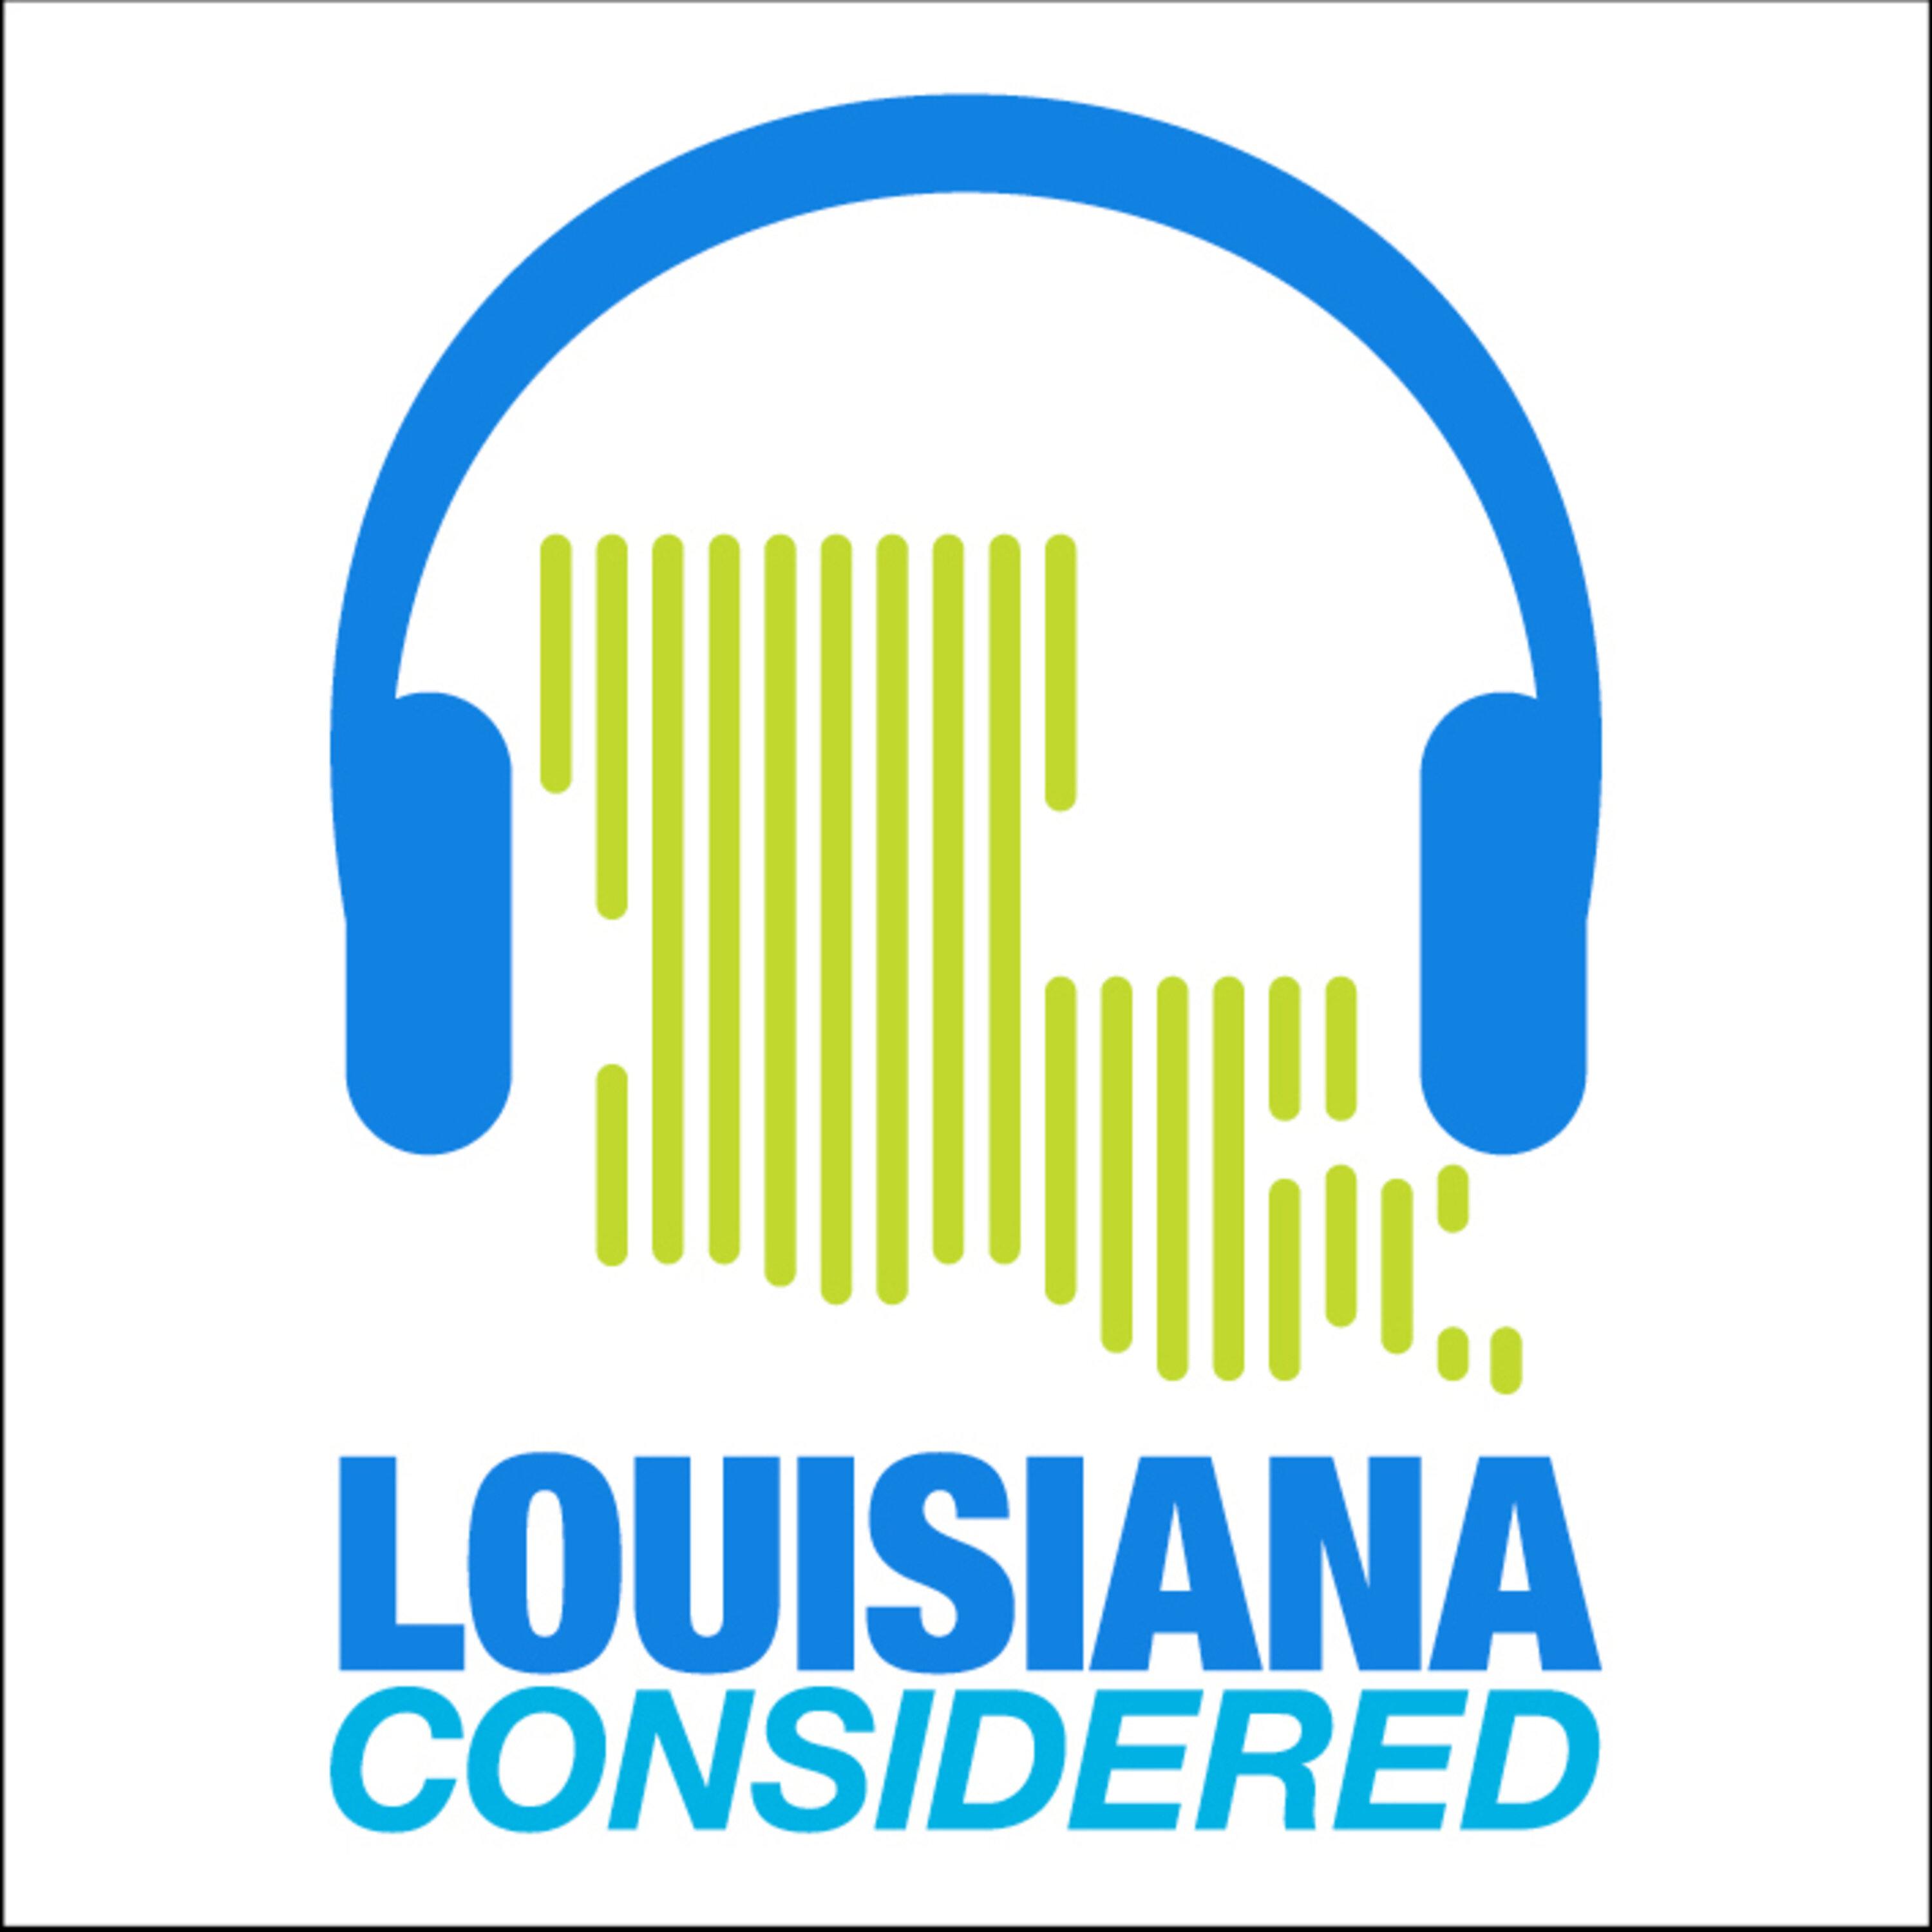 Thumbnail for "Louisiana Considered: Tulane Summer Lyric Theatre’s Season-Closing Production, Ensuring Proper Hydration, Le Petit Theatre’s 105th Season".